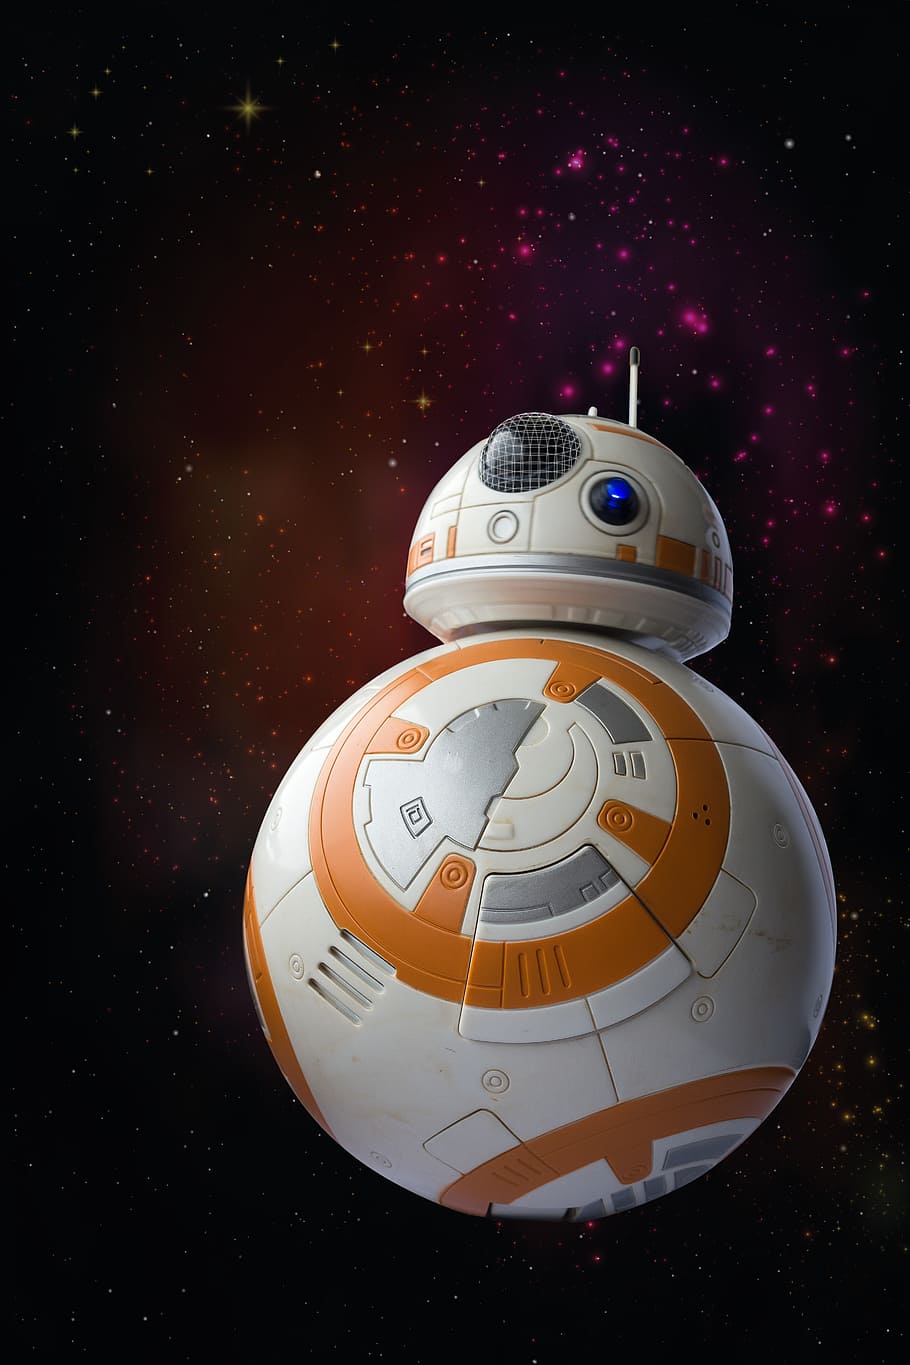 HD wallpaper: BB-8 from Star Wars movie